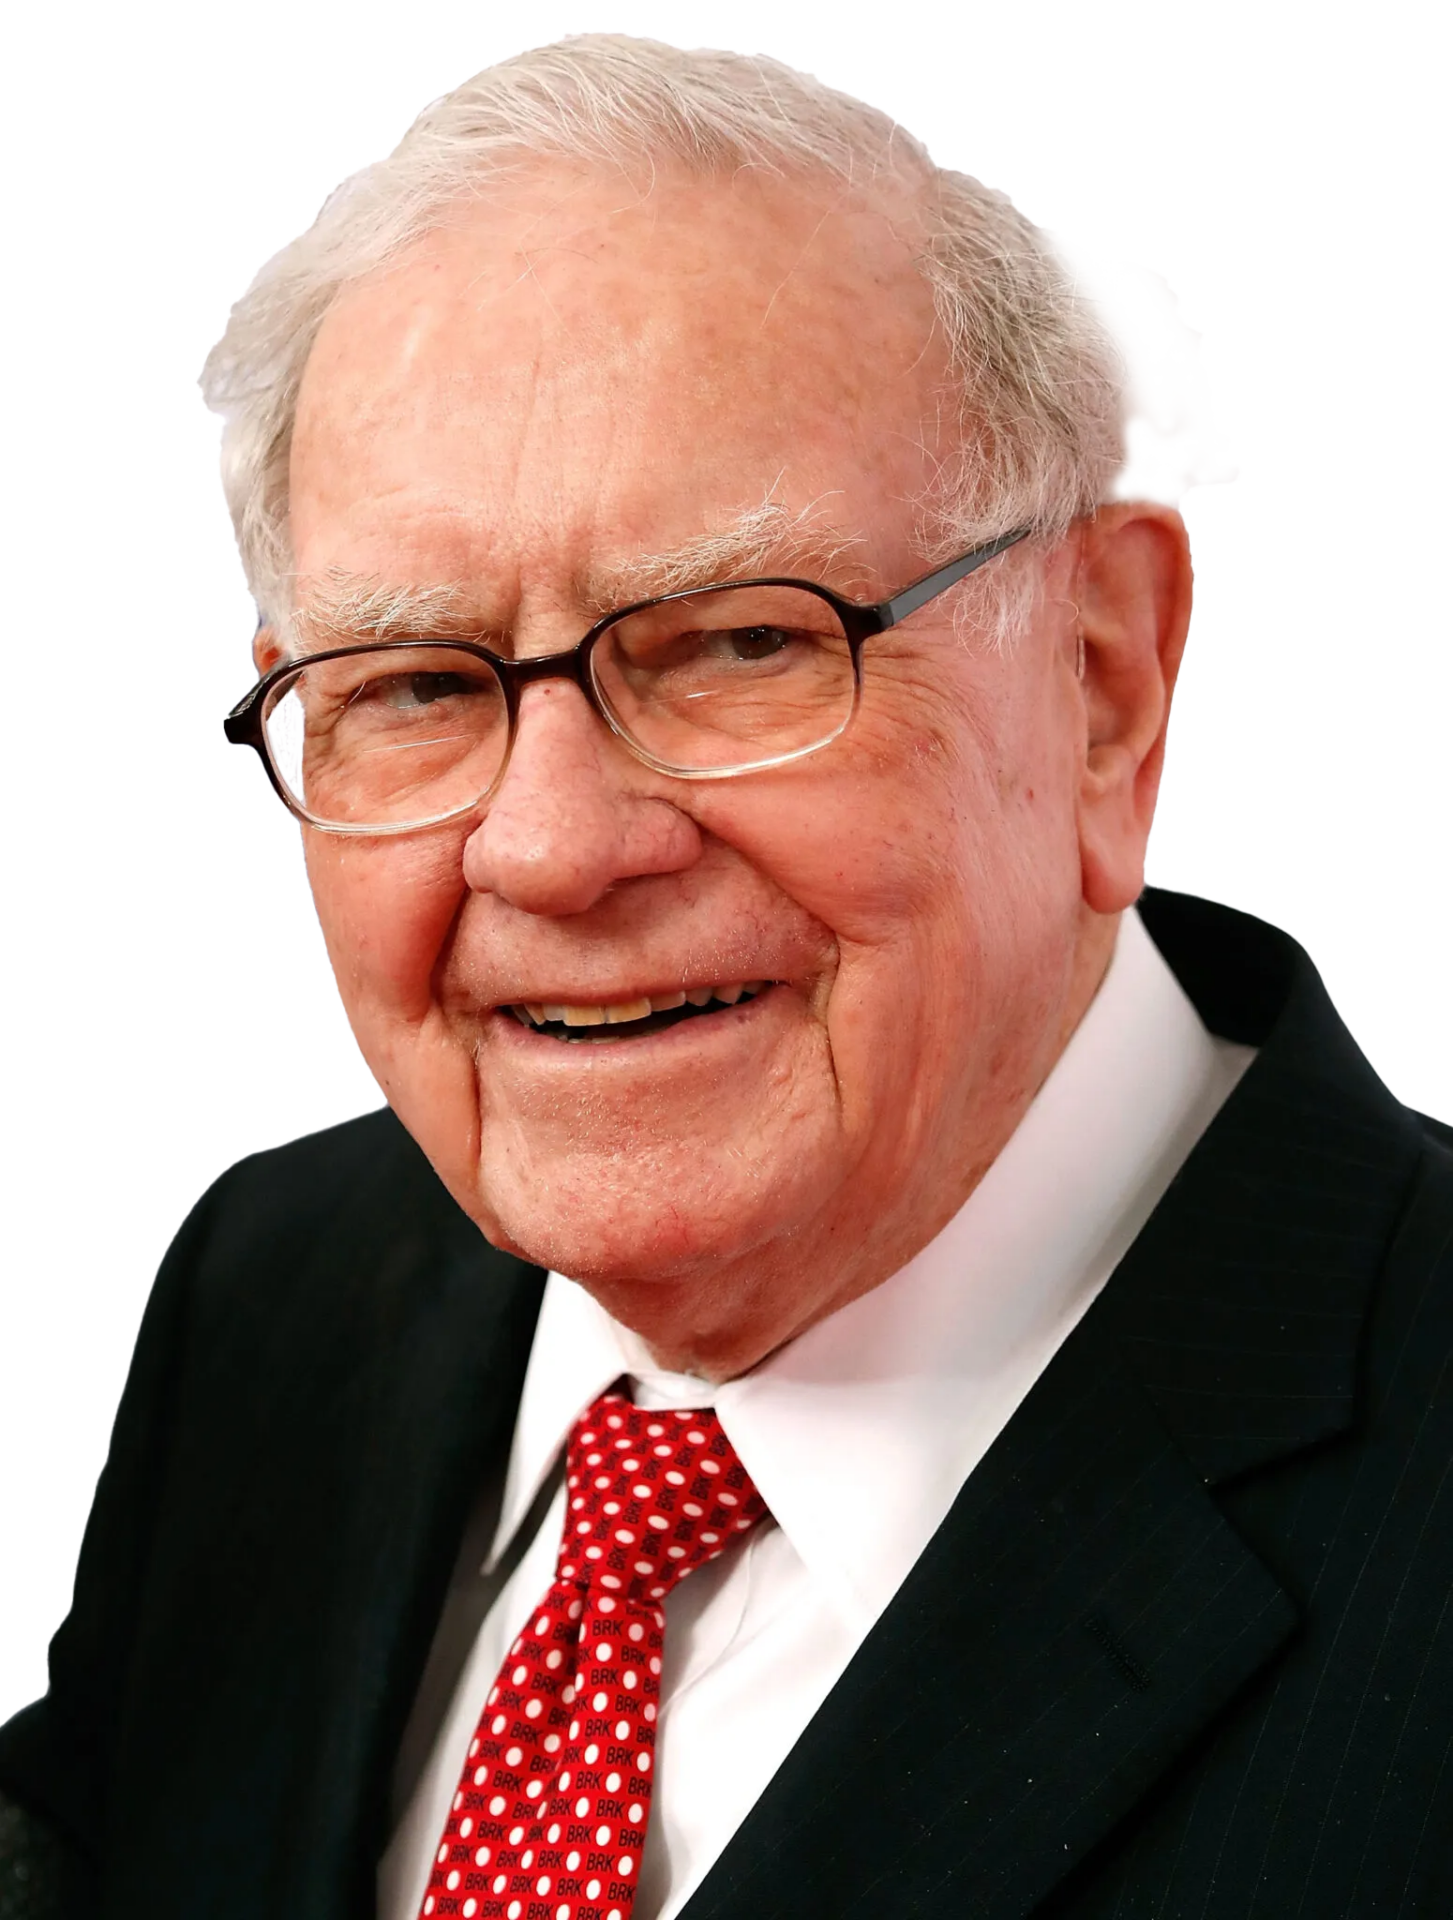 We follow the Warren Buffett principle - THE TREND